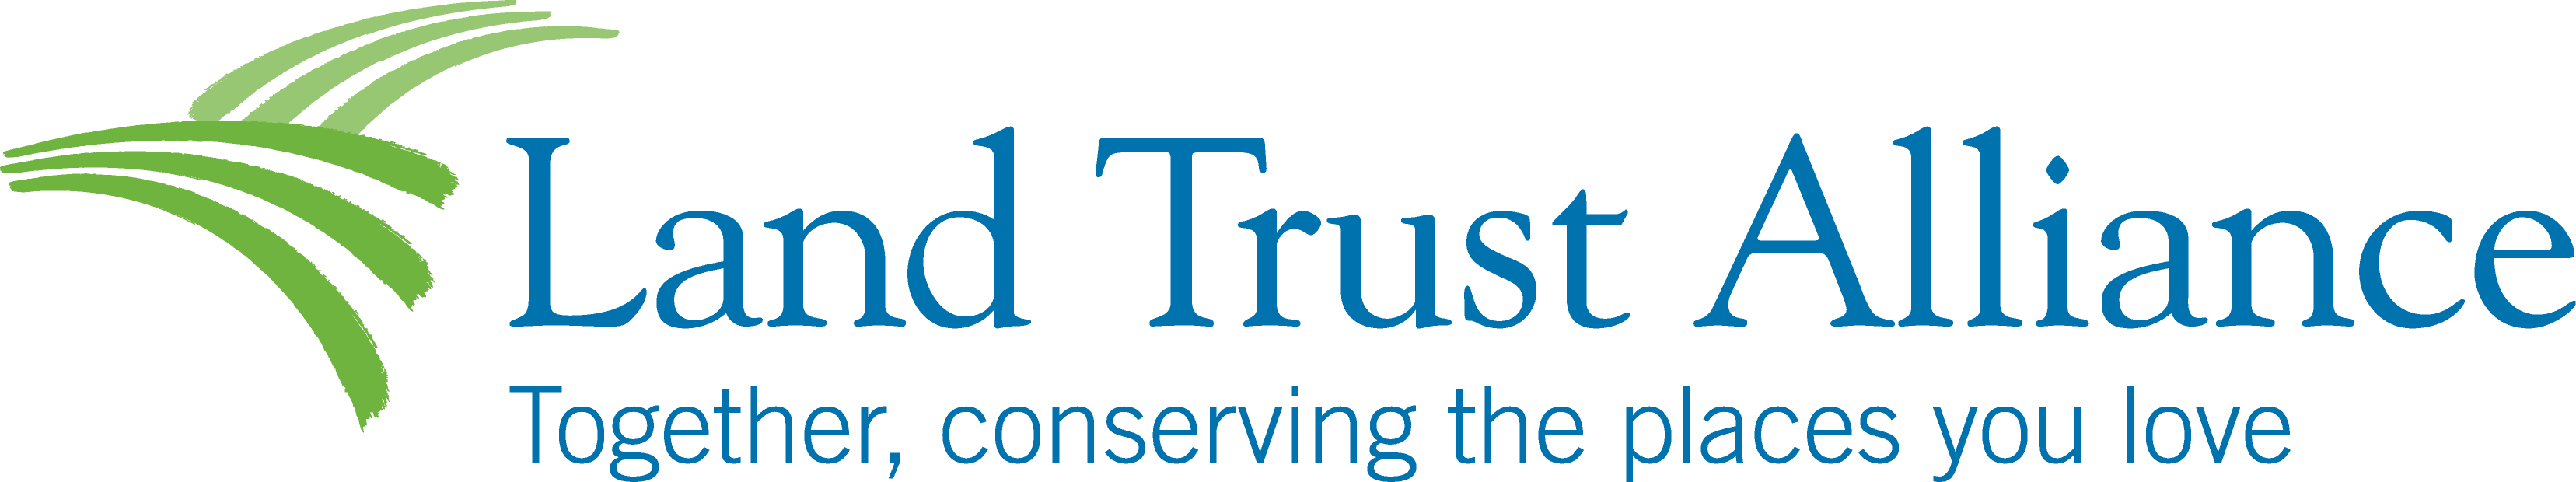 Land Trust Alliance horizontal logo